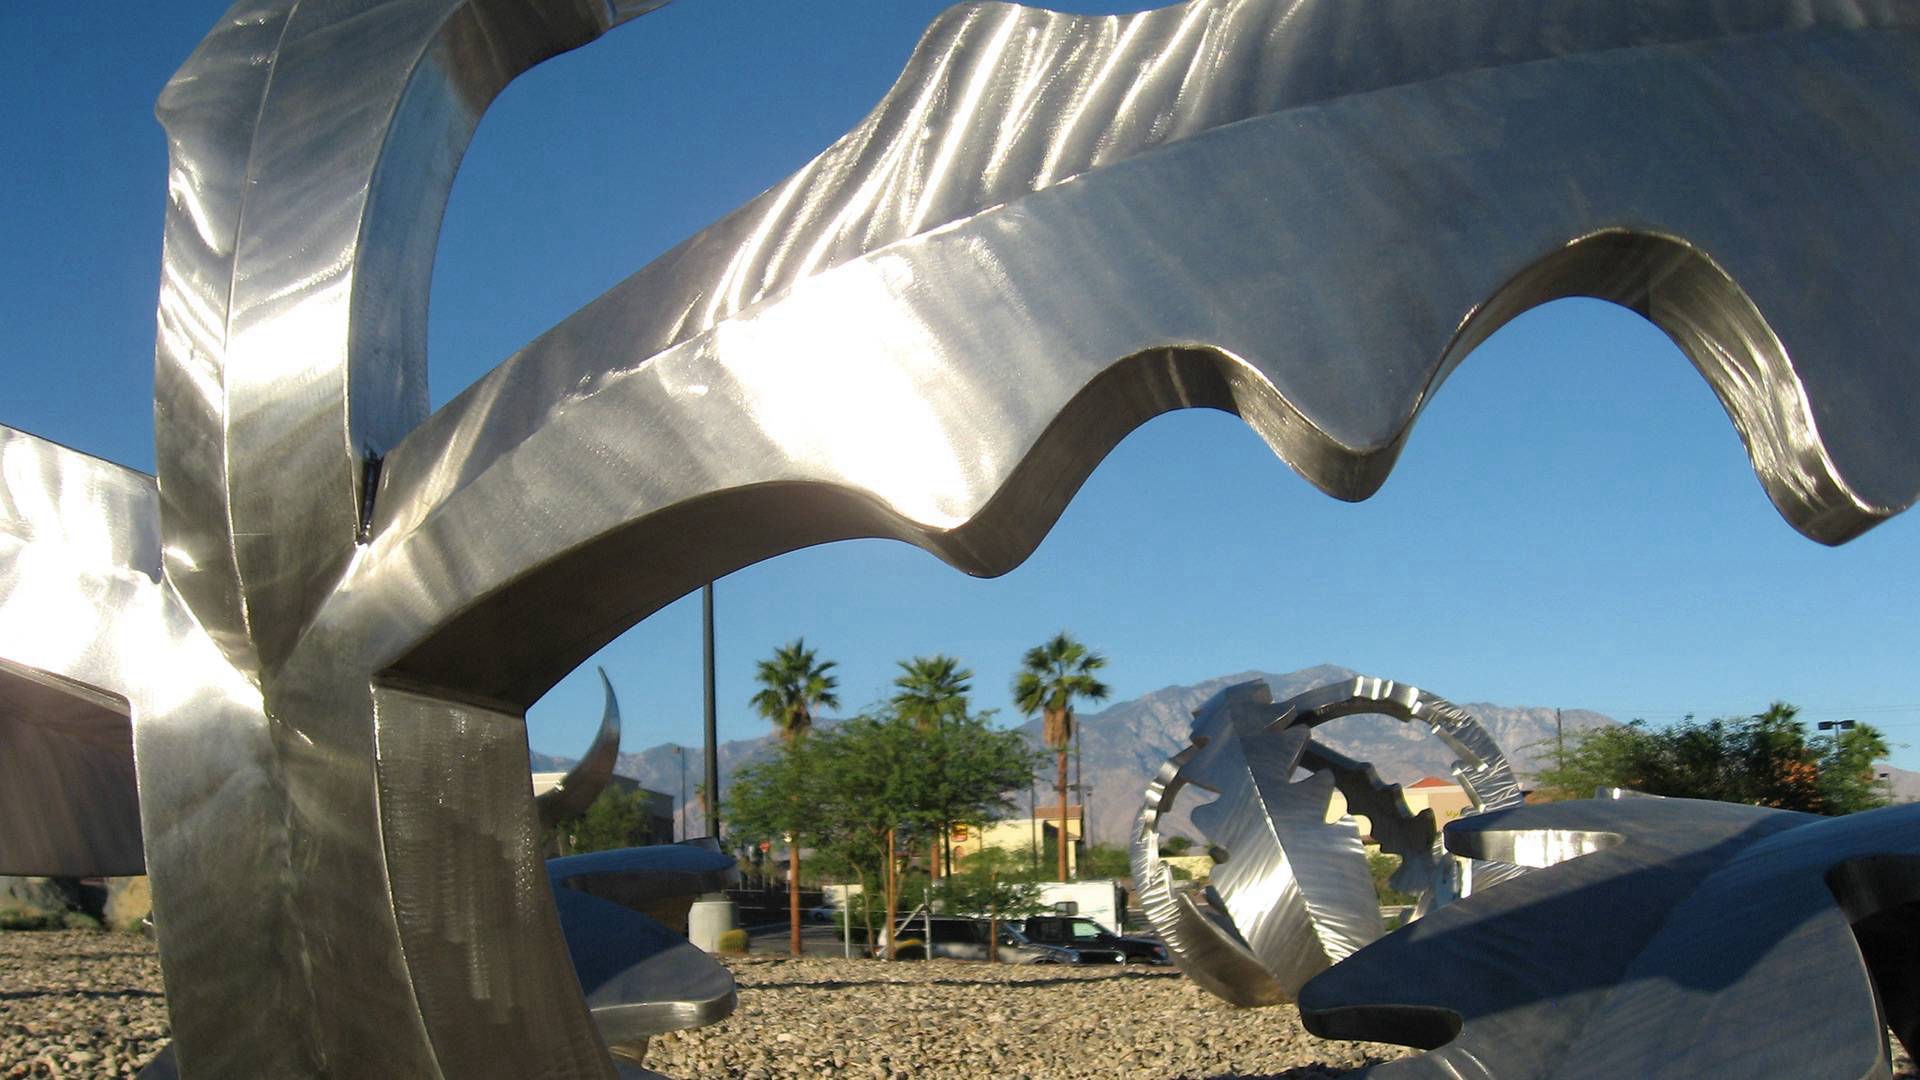 Tumbling Weed - stainless steel public art dandelion sculpture by Heath Satow Palm Desert CA